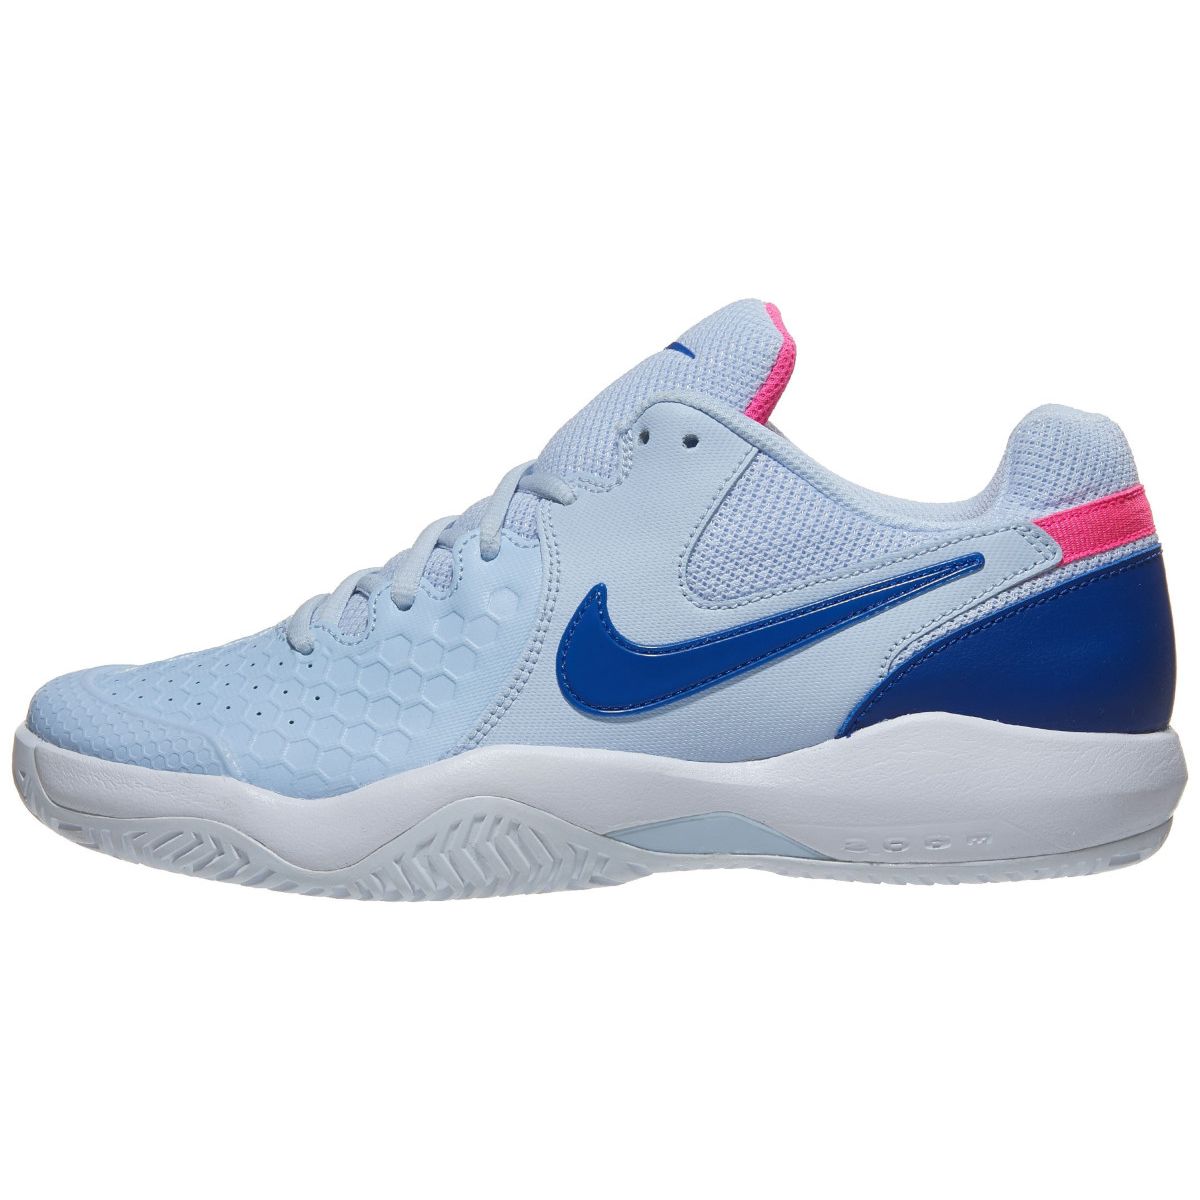 Nike Air Zoom Resistance Women's Tennis Shoes 918201-403